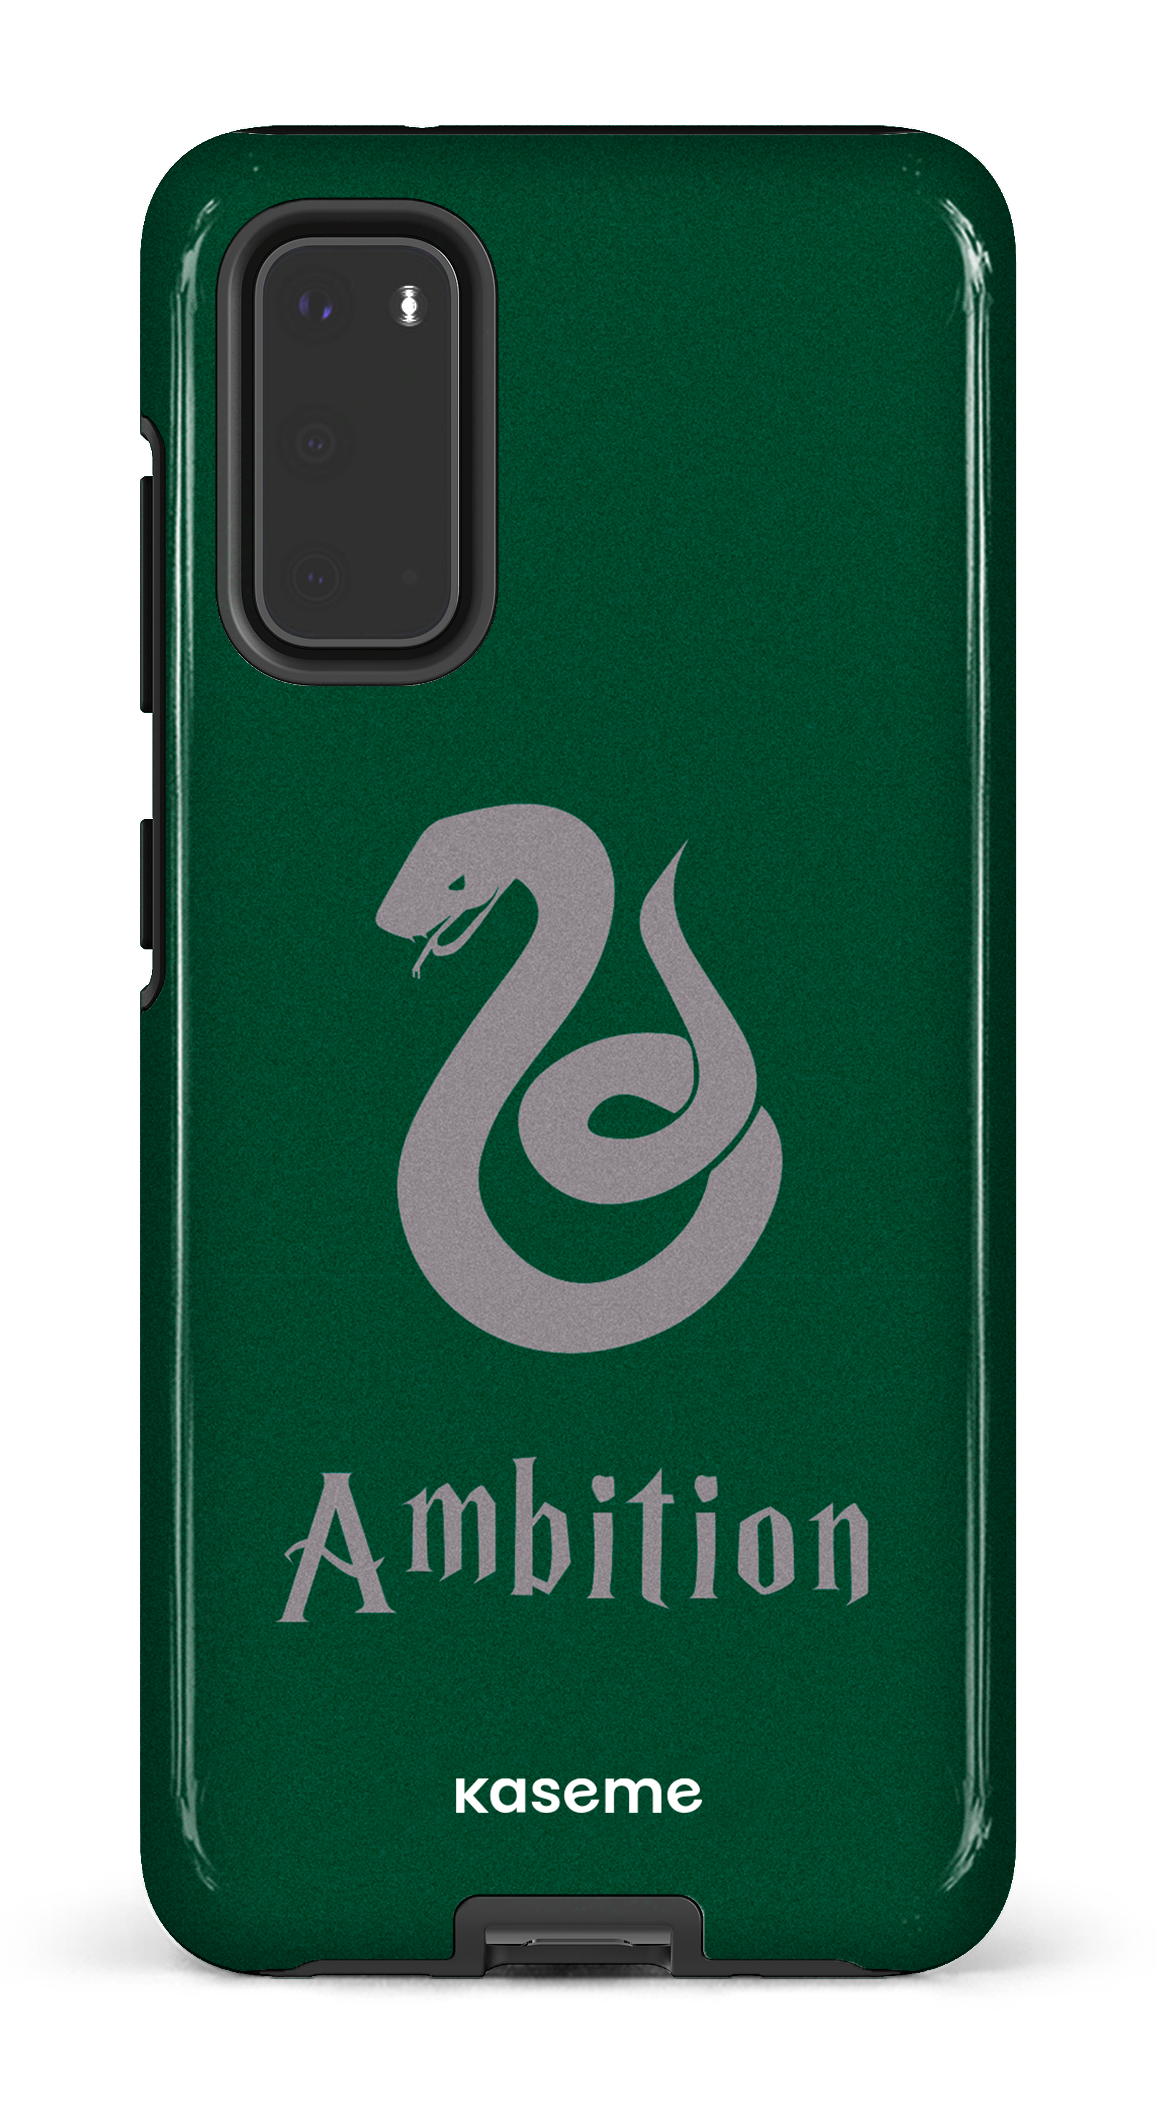 Ambition - Galaxy S20